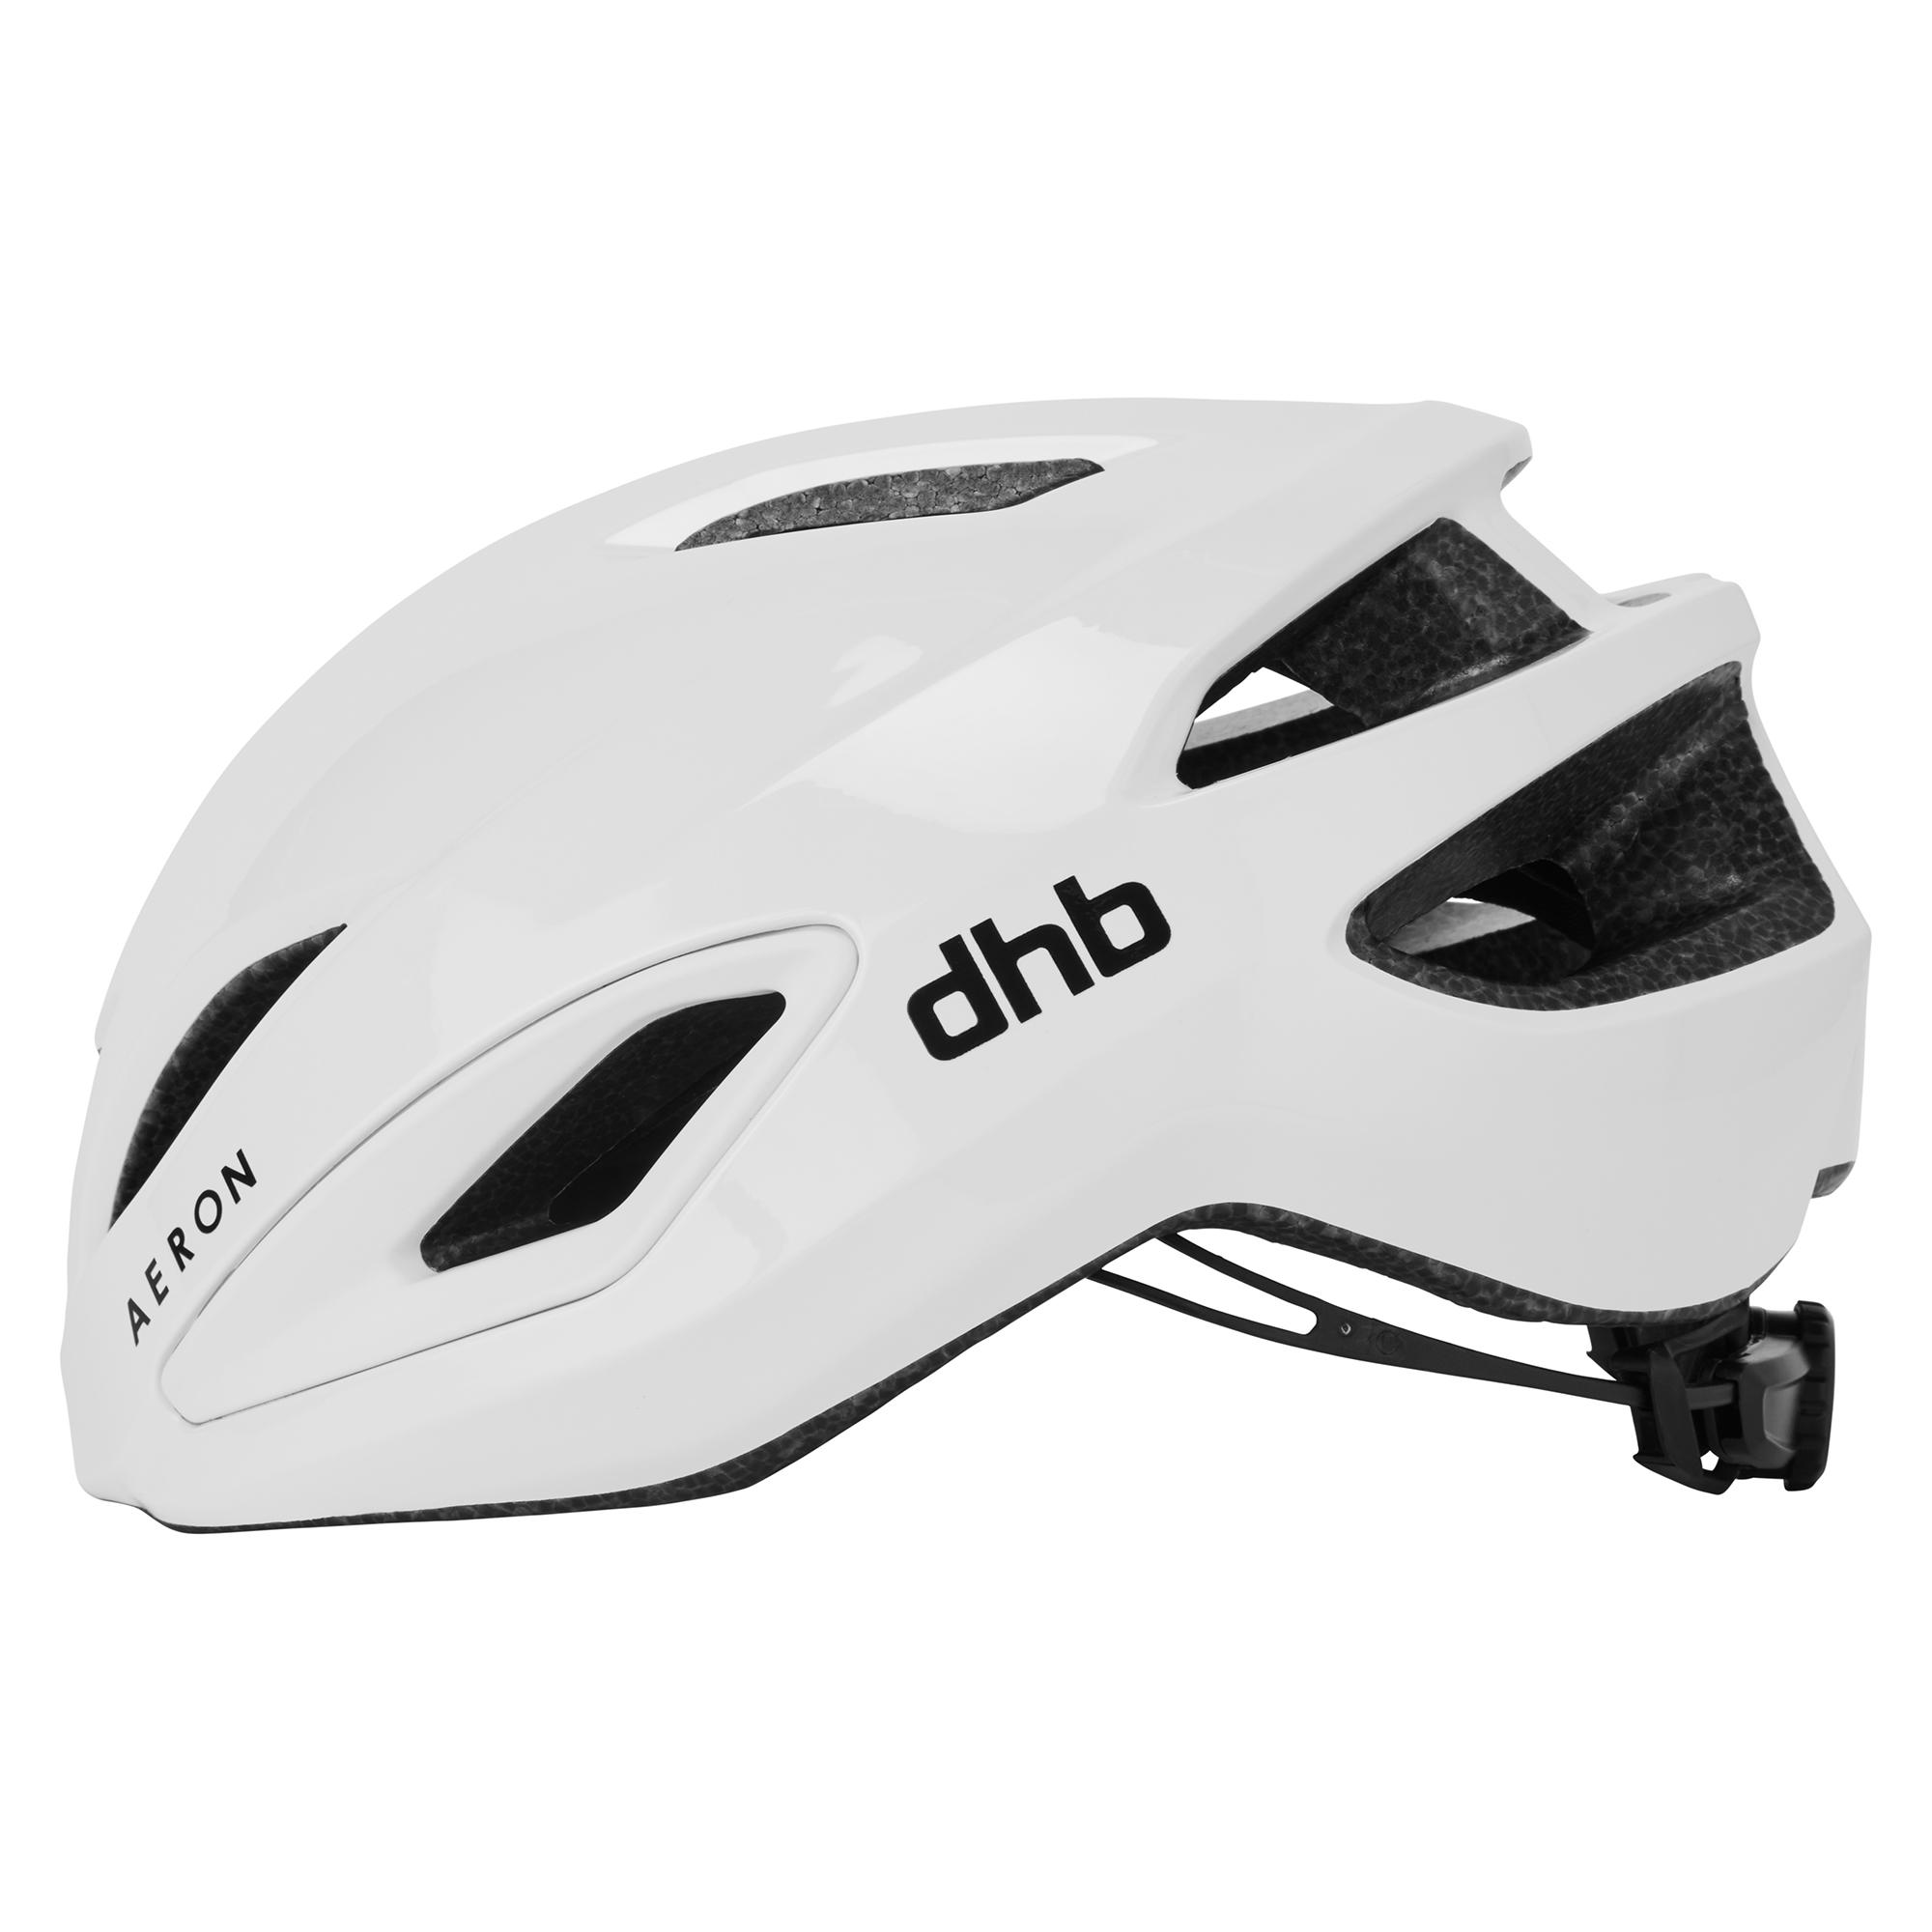 Dhb Aeron Helmet - White Gloss